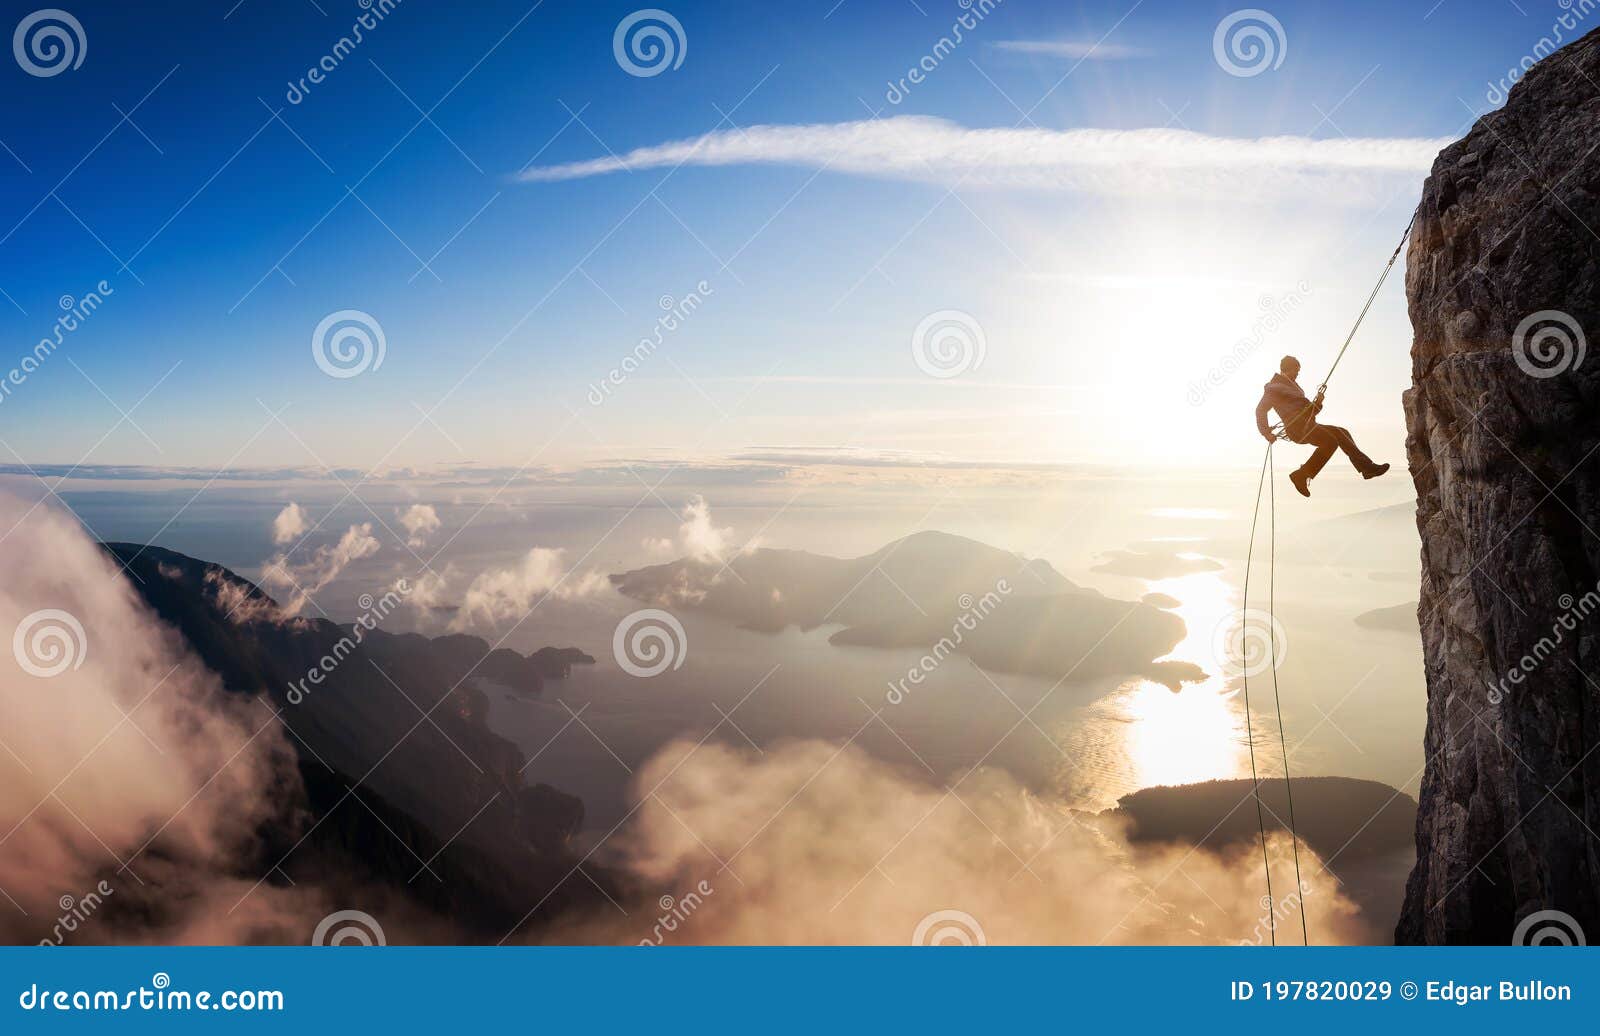 epic adventurous extreme sport composite of rock climbing